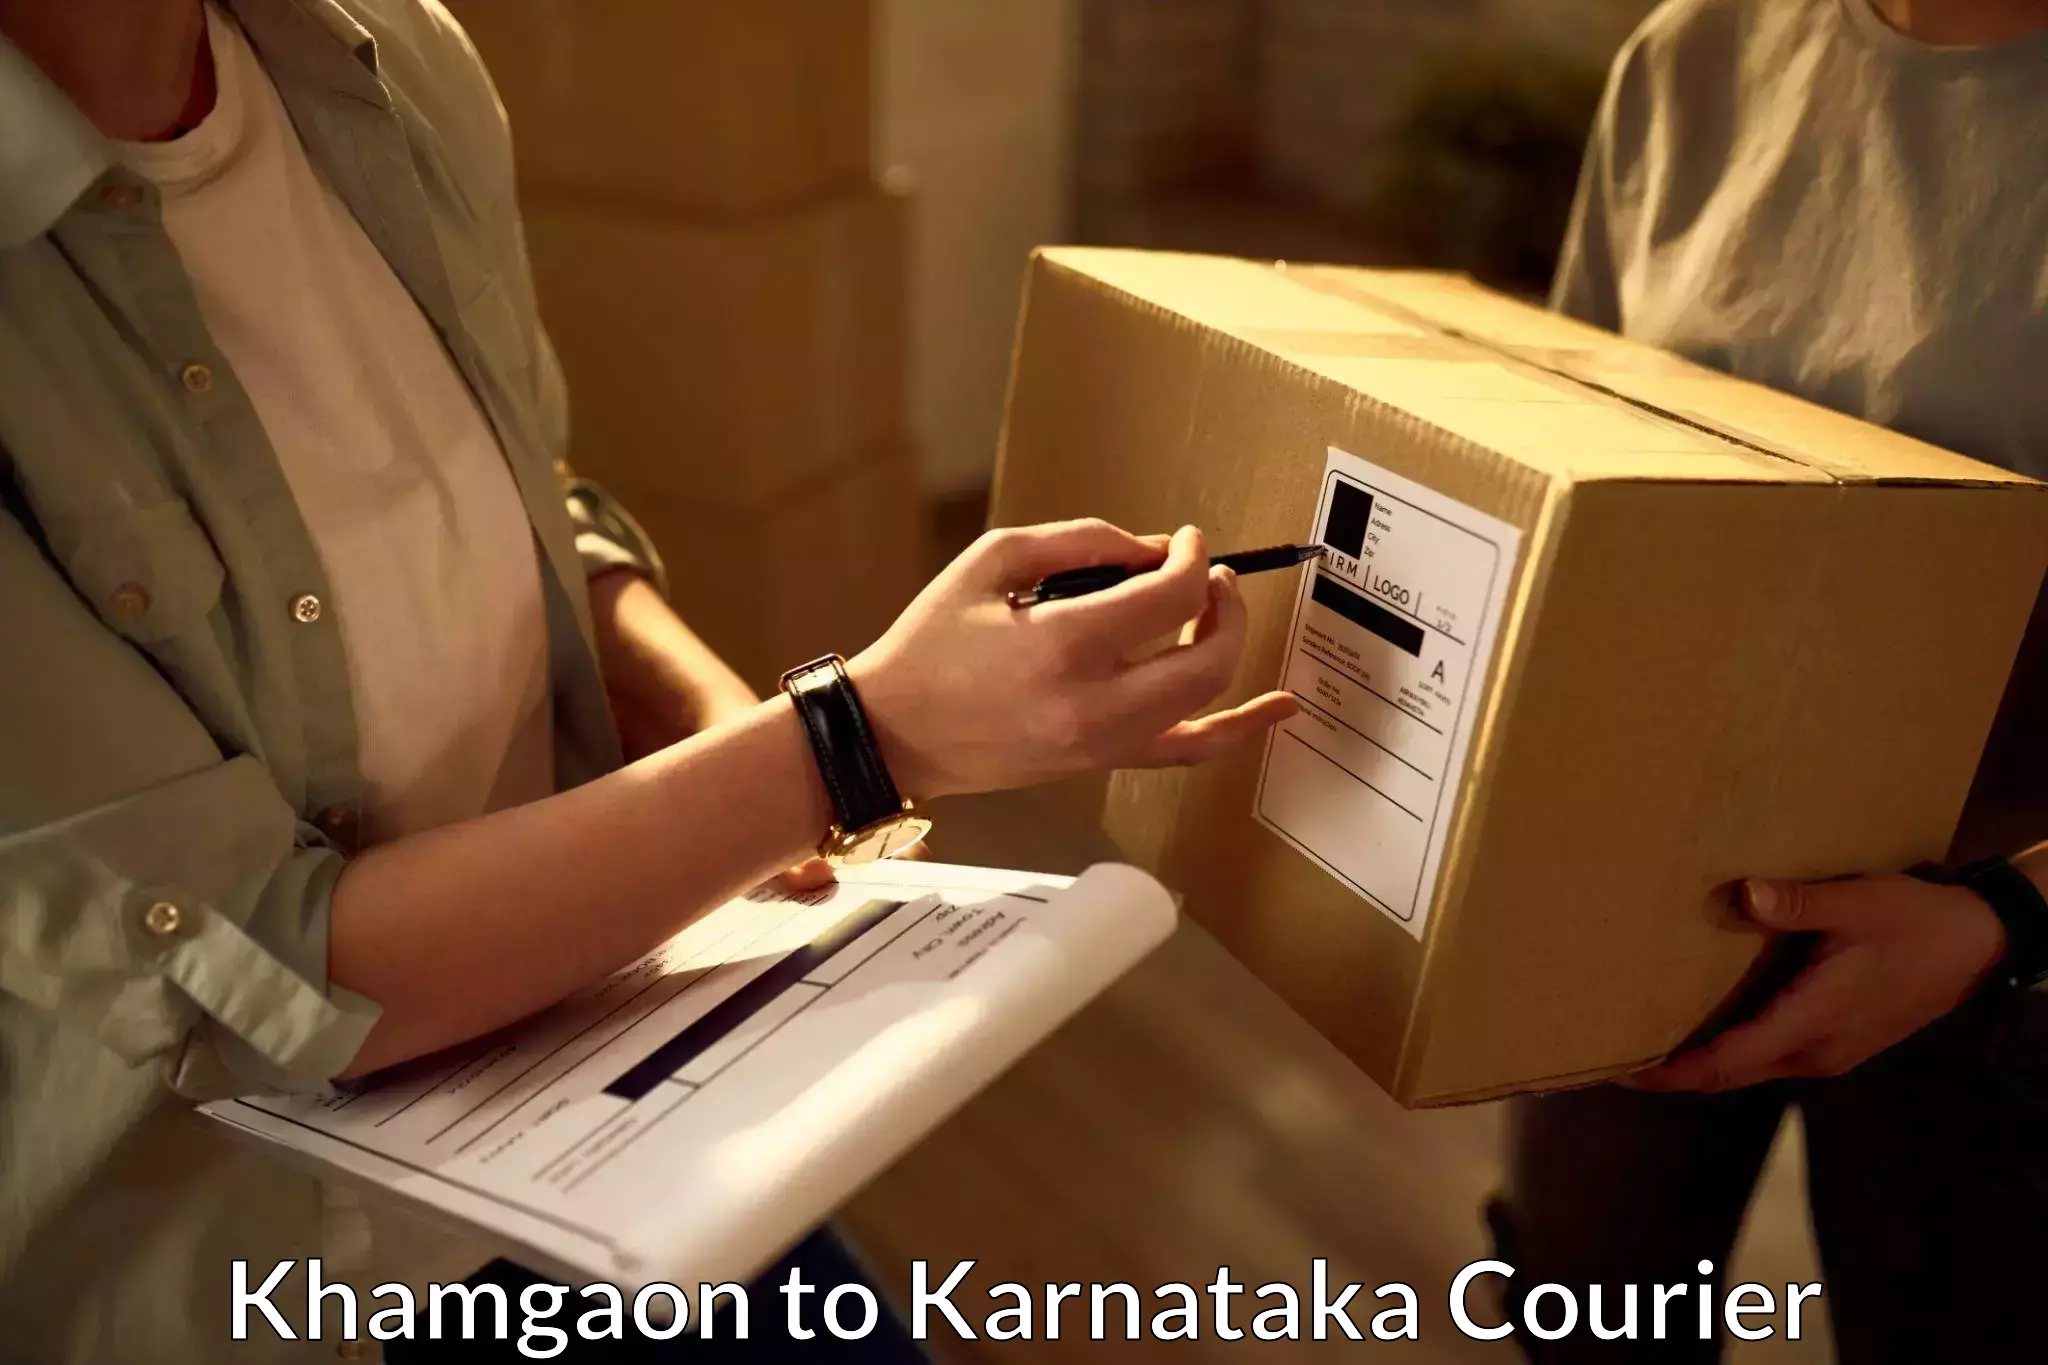 Local delivery service Khamgaon to Bangarapet